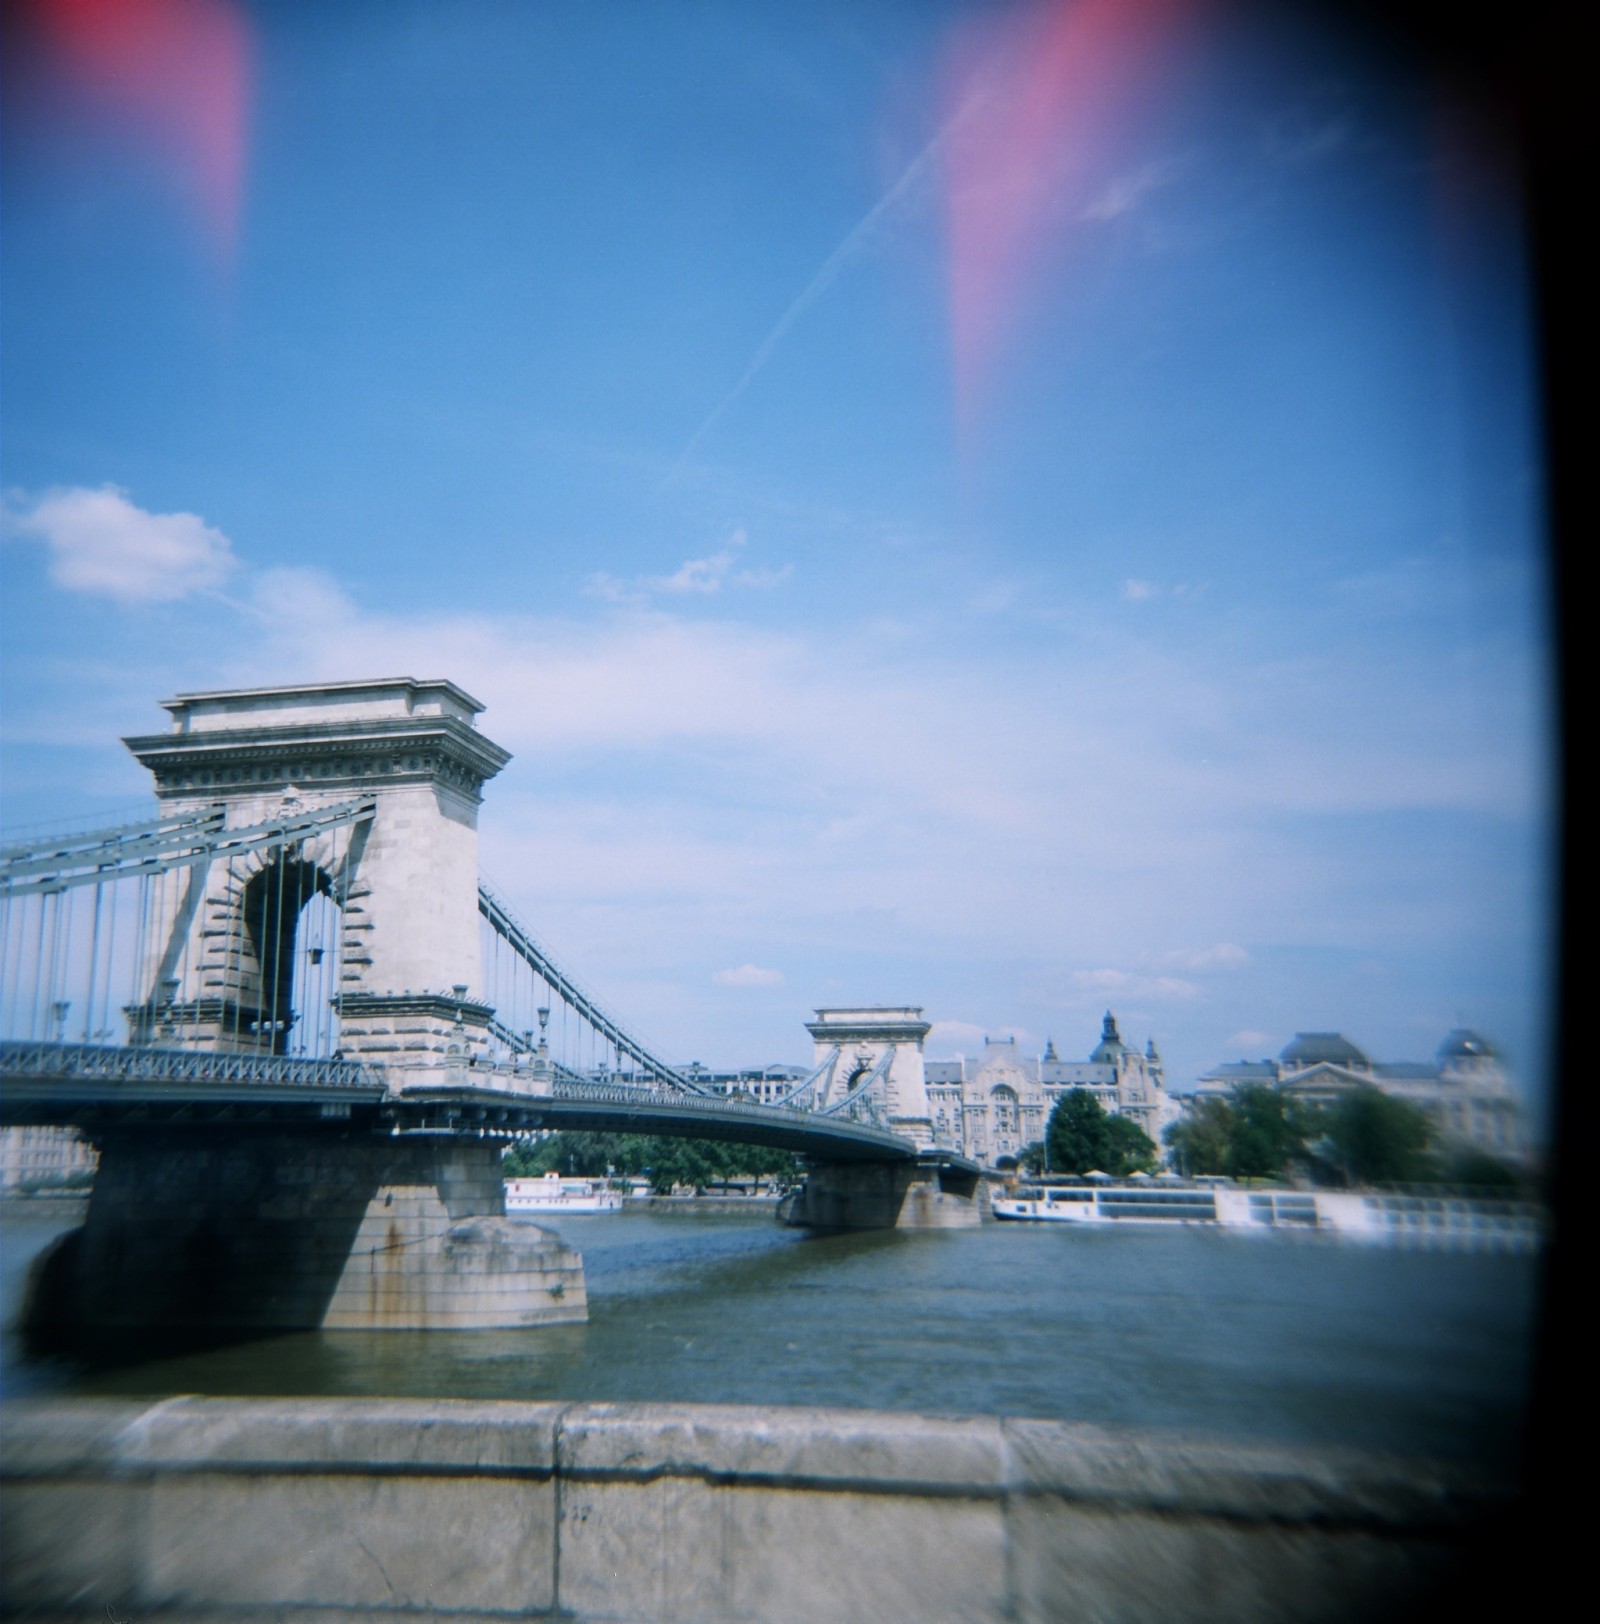 Chain Bridge, Budapest | Taken on a Holga 120N using 120 colour film